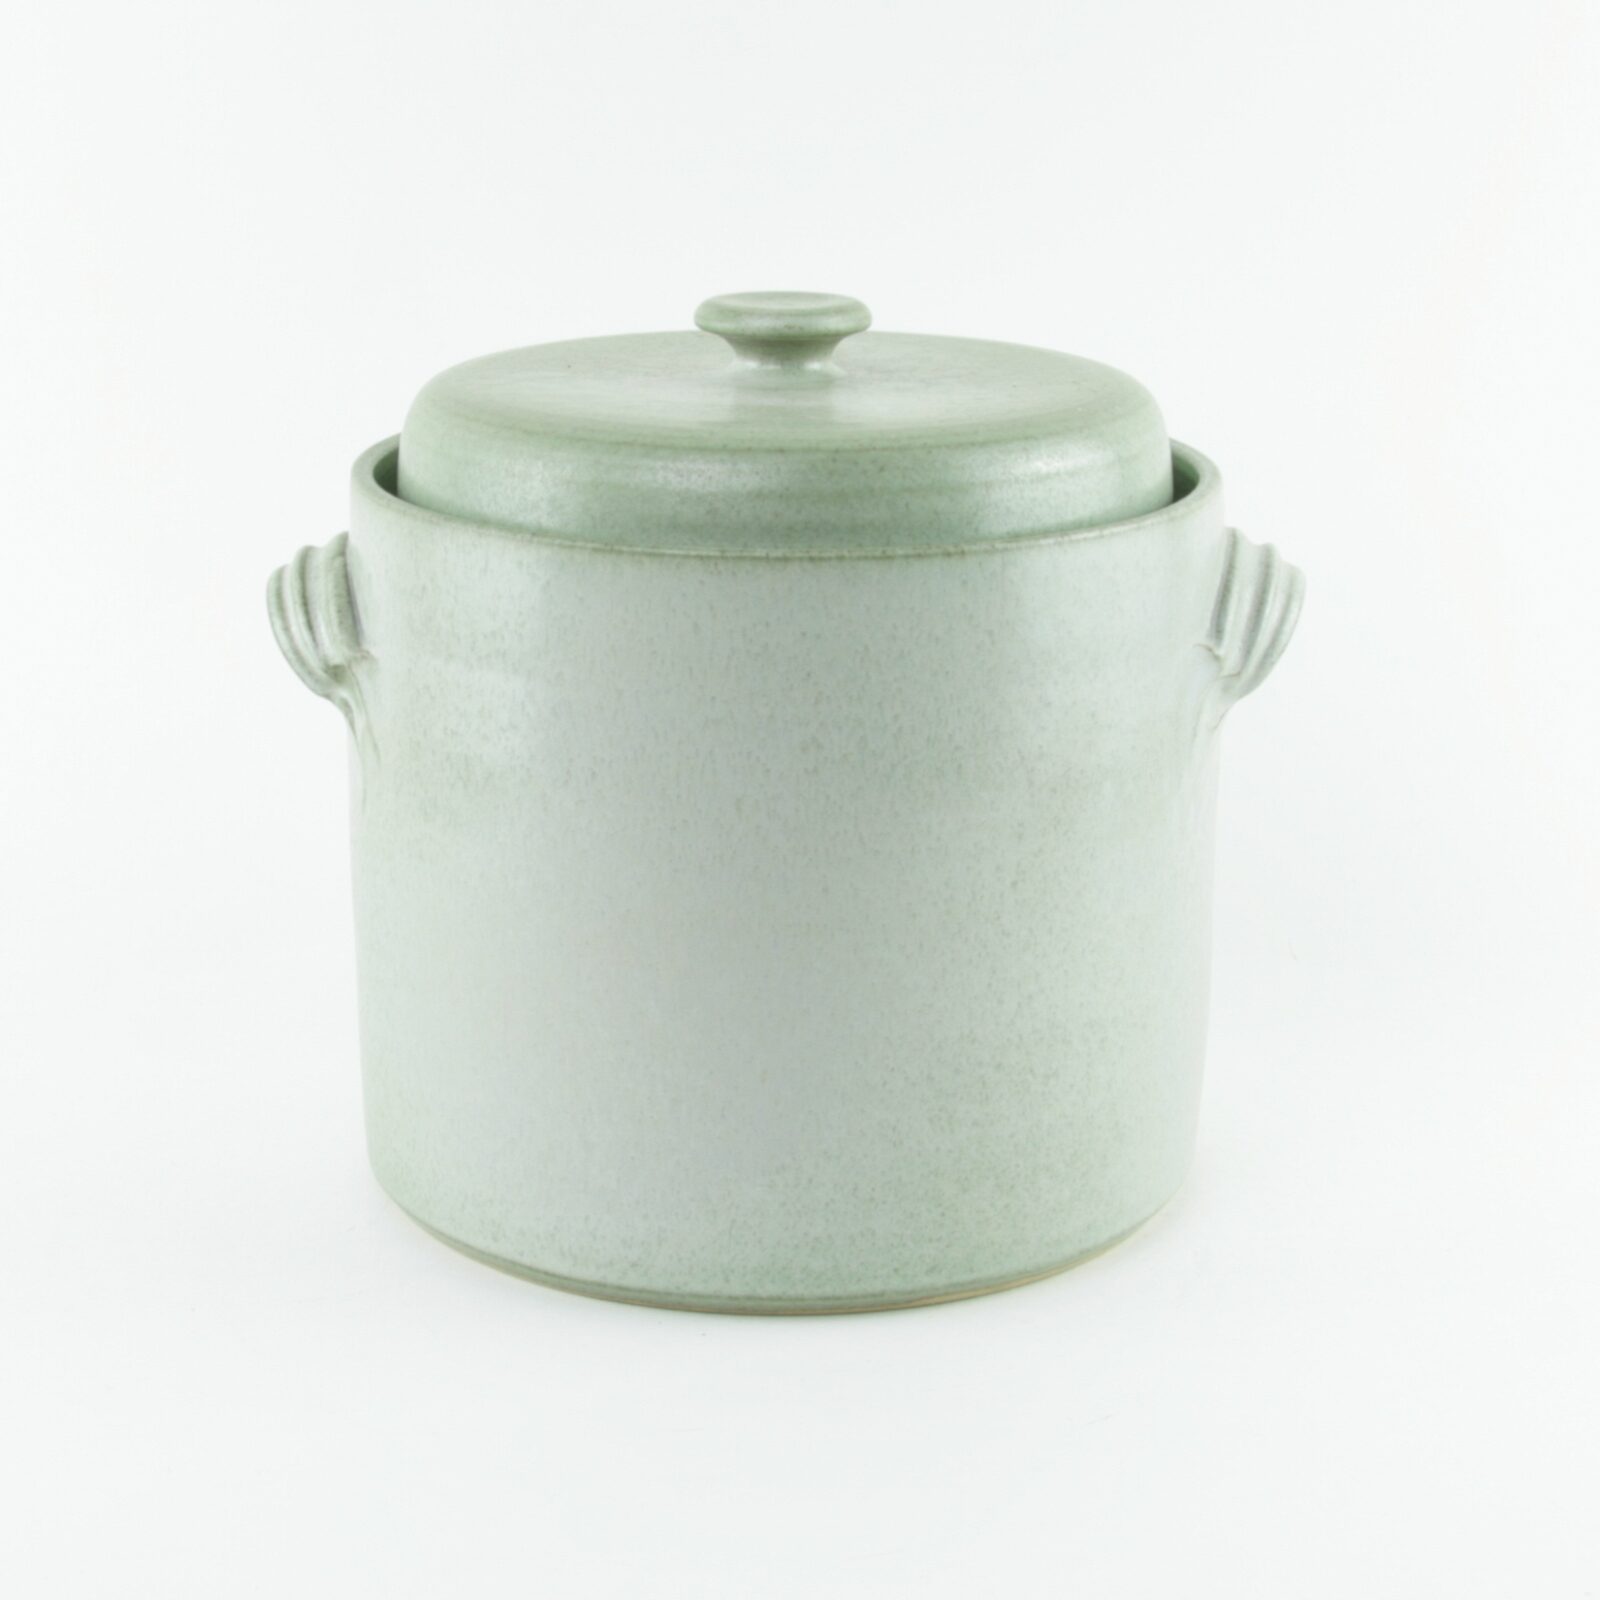 2 litre handmade ceramic sauerkraut crock in green with weight stones